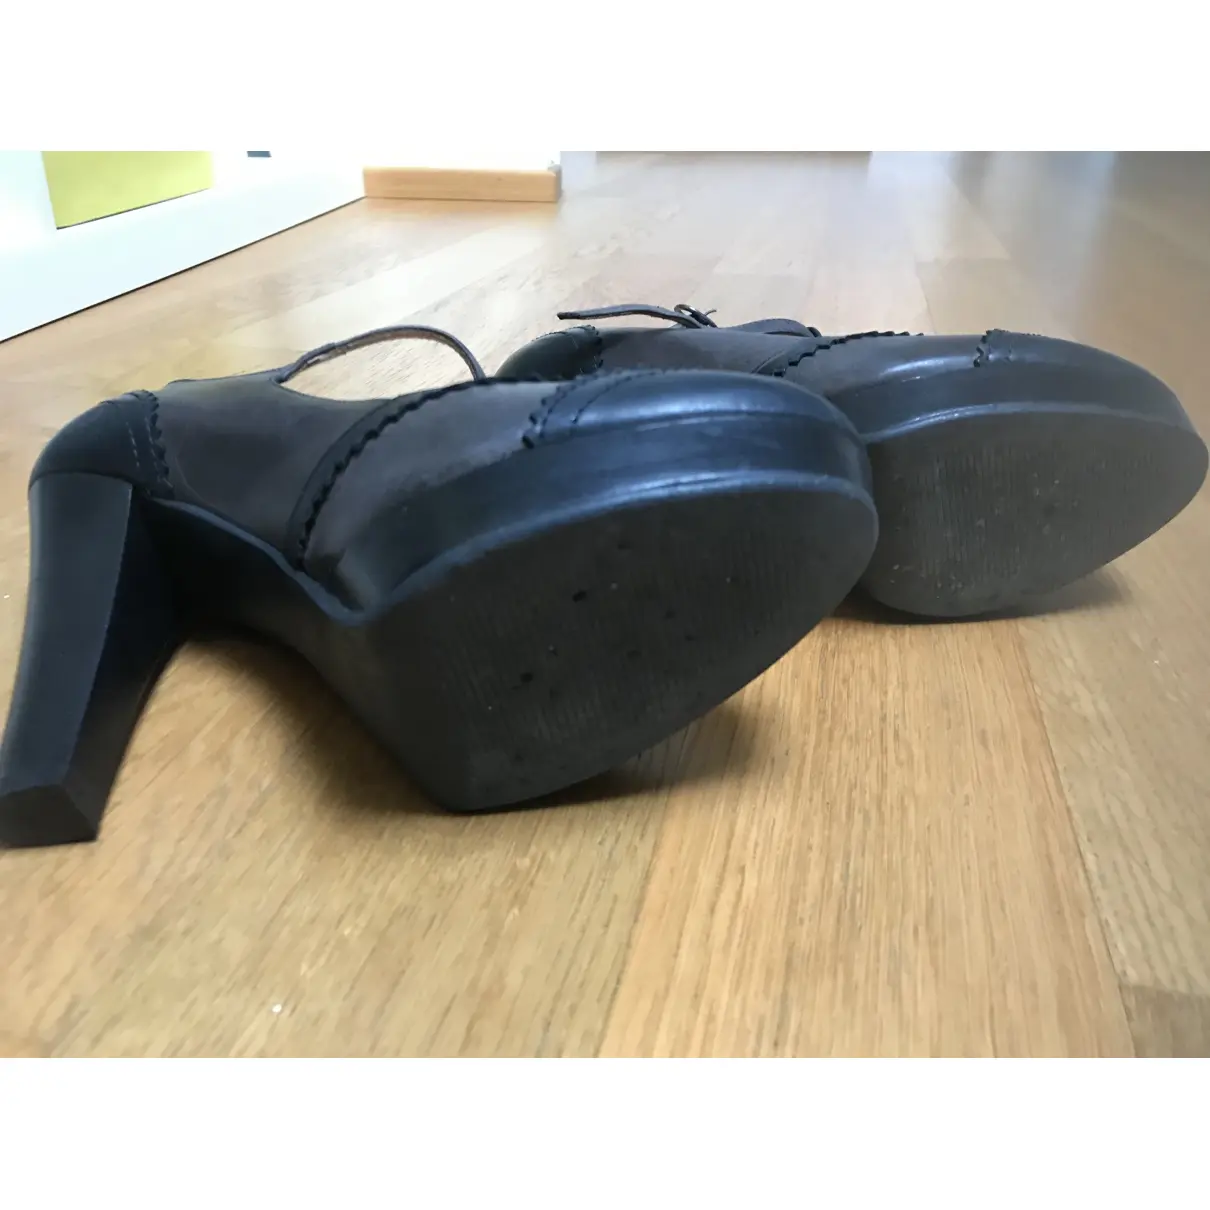 Leather heels Chiarini Bologna